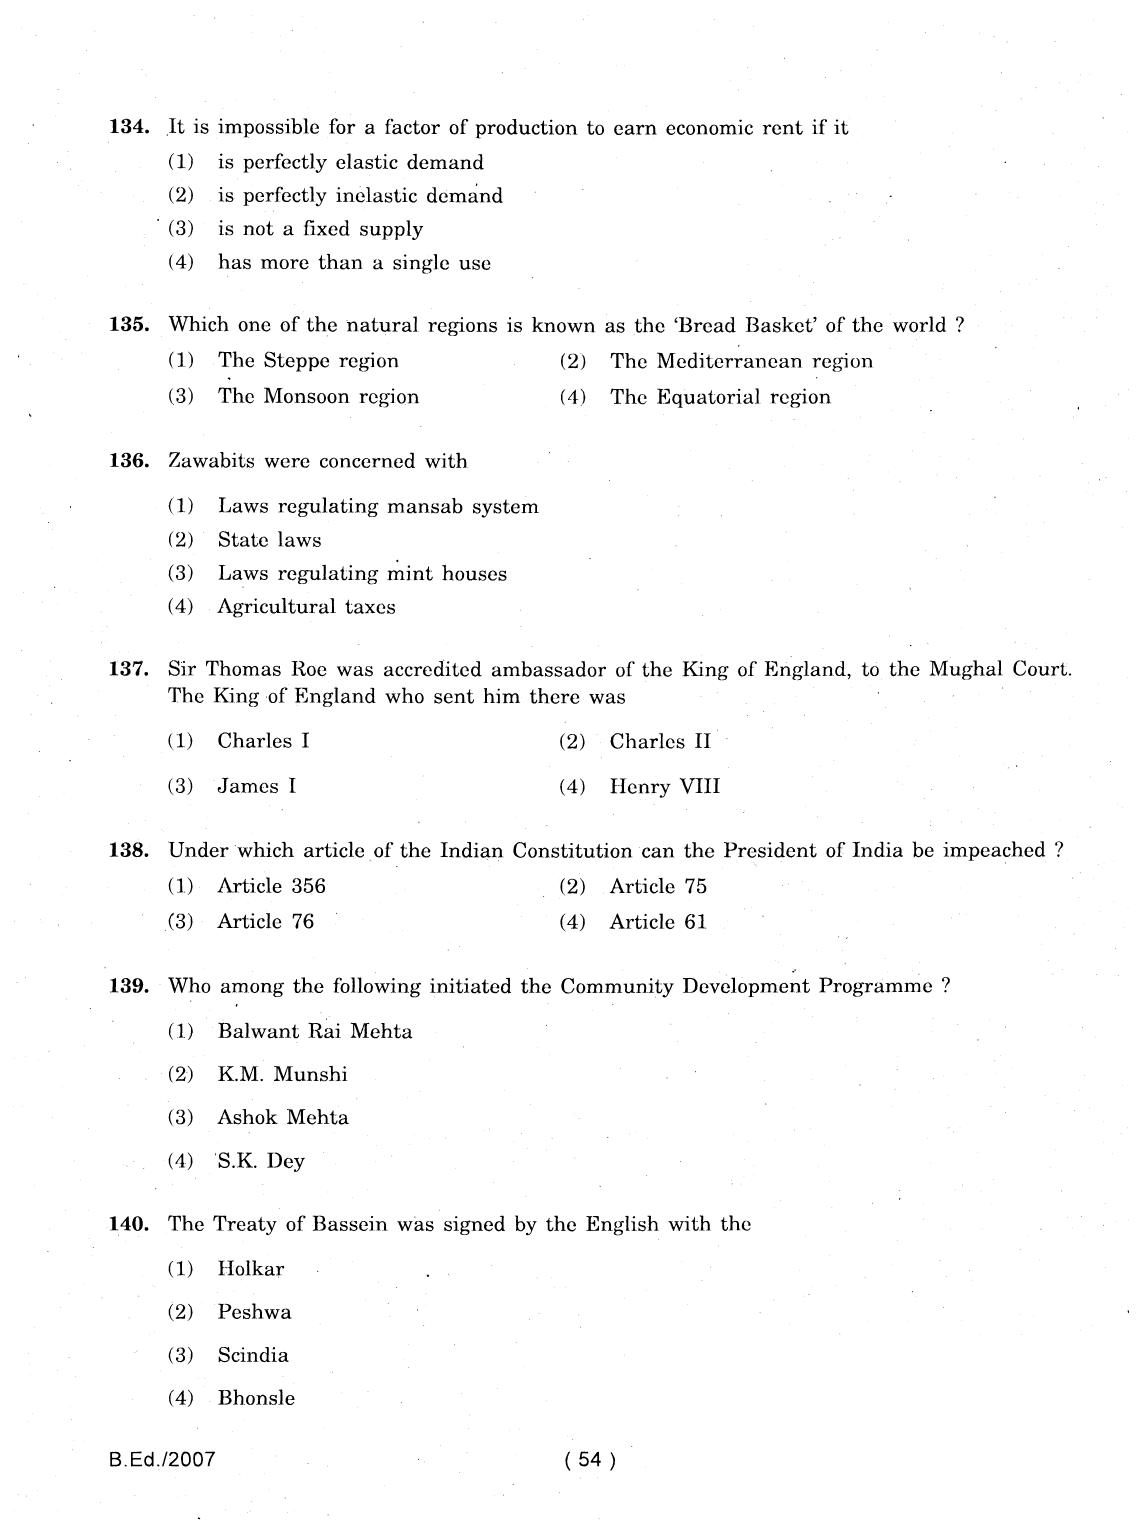 IGNOU B.Ed 2007 Question Paper - Page 54